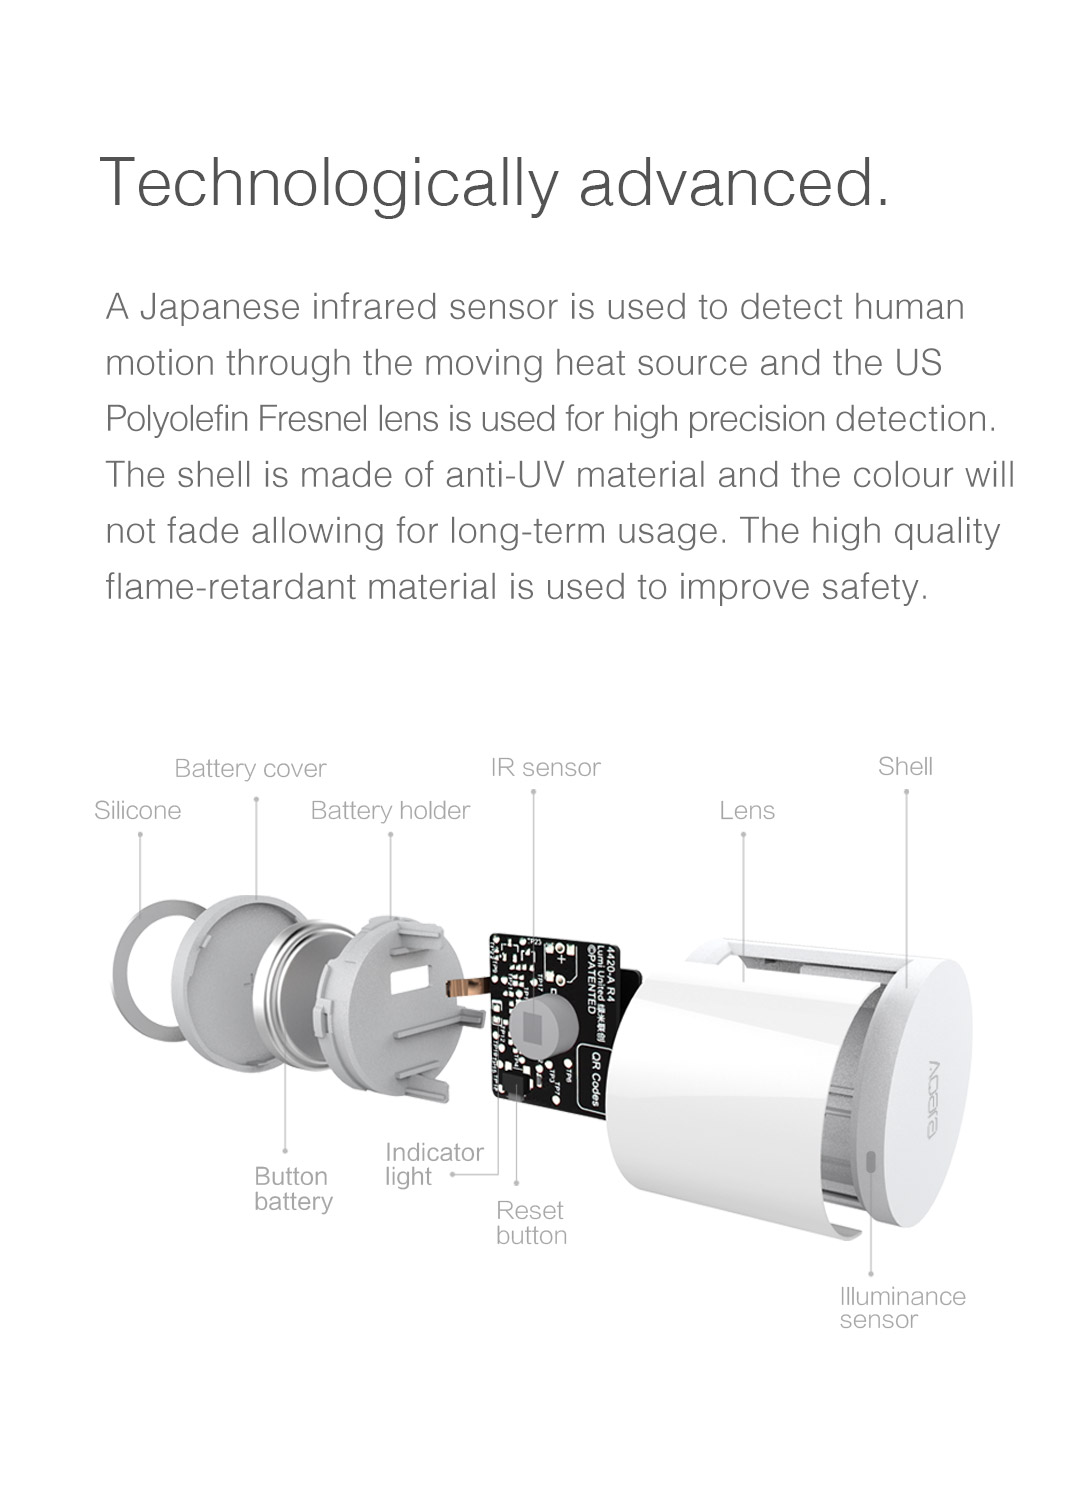 Aqara human body sensor uses a Japanese infrared sensor to detect human motion